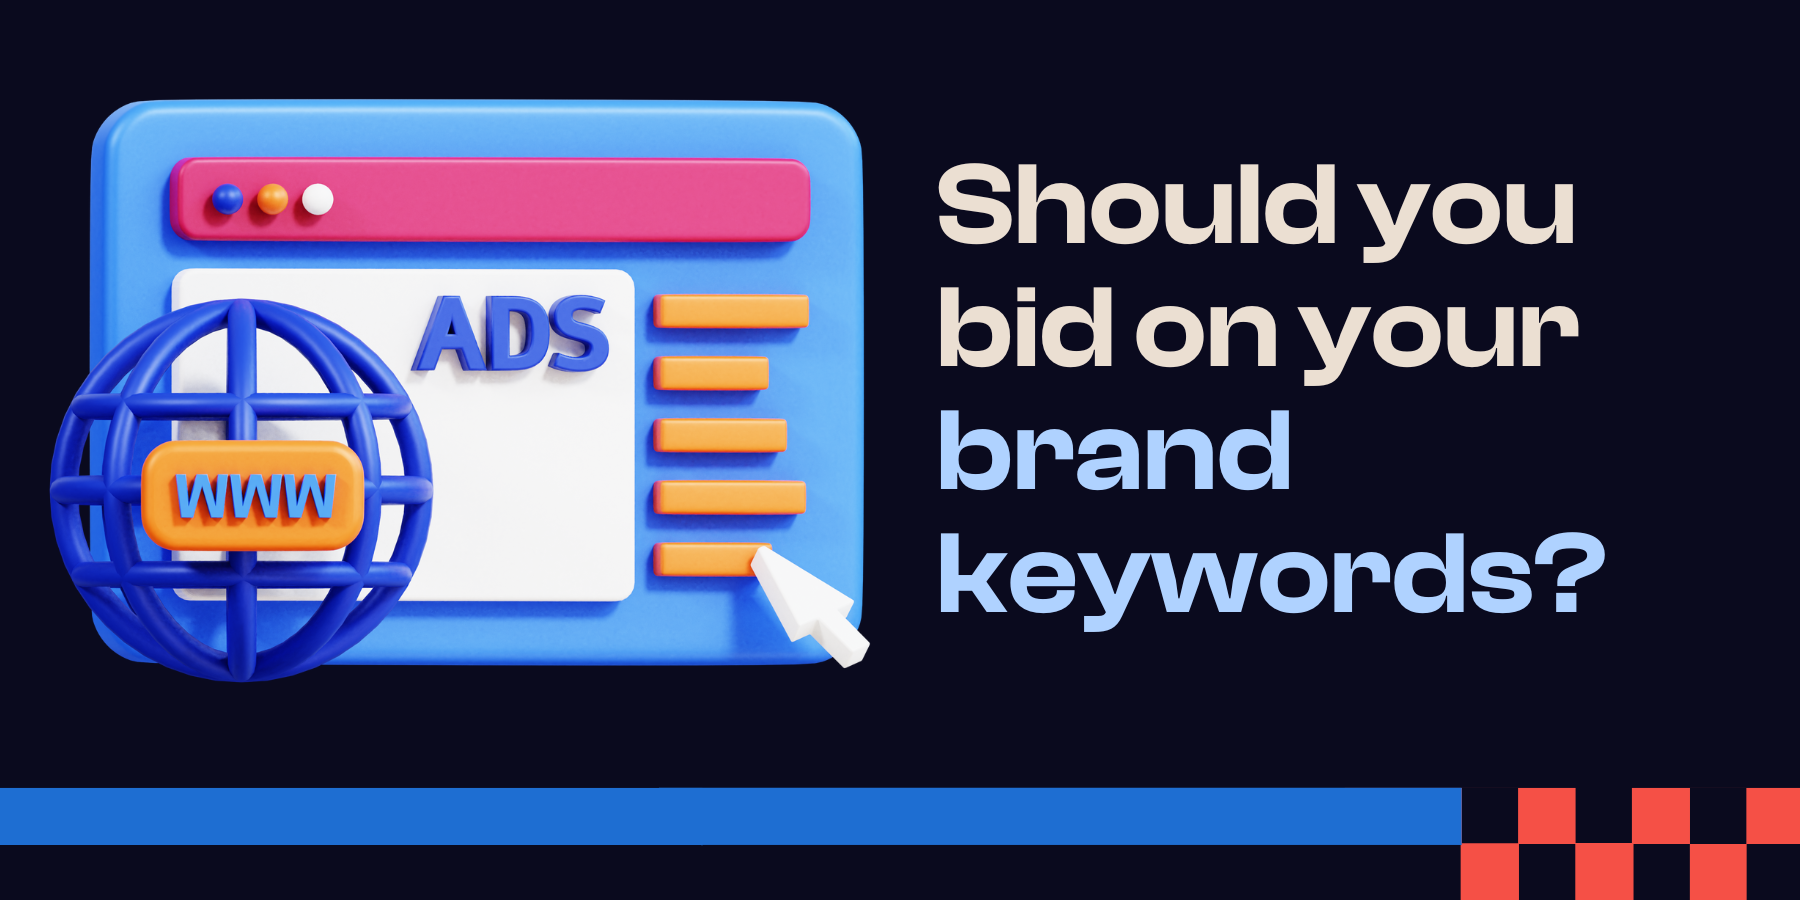 Should you bid on your brand keywords?